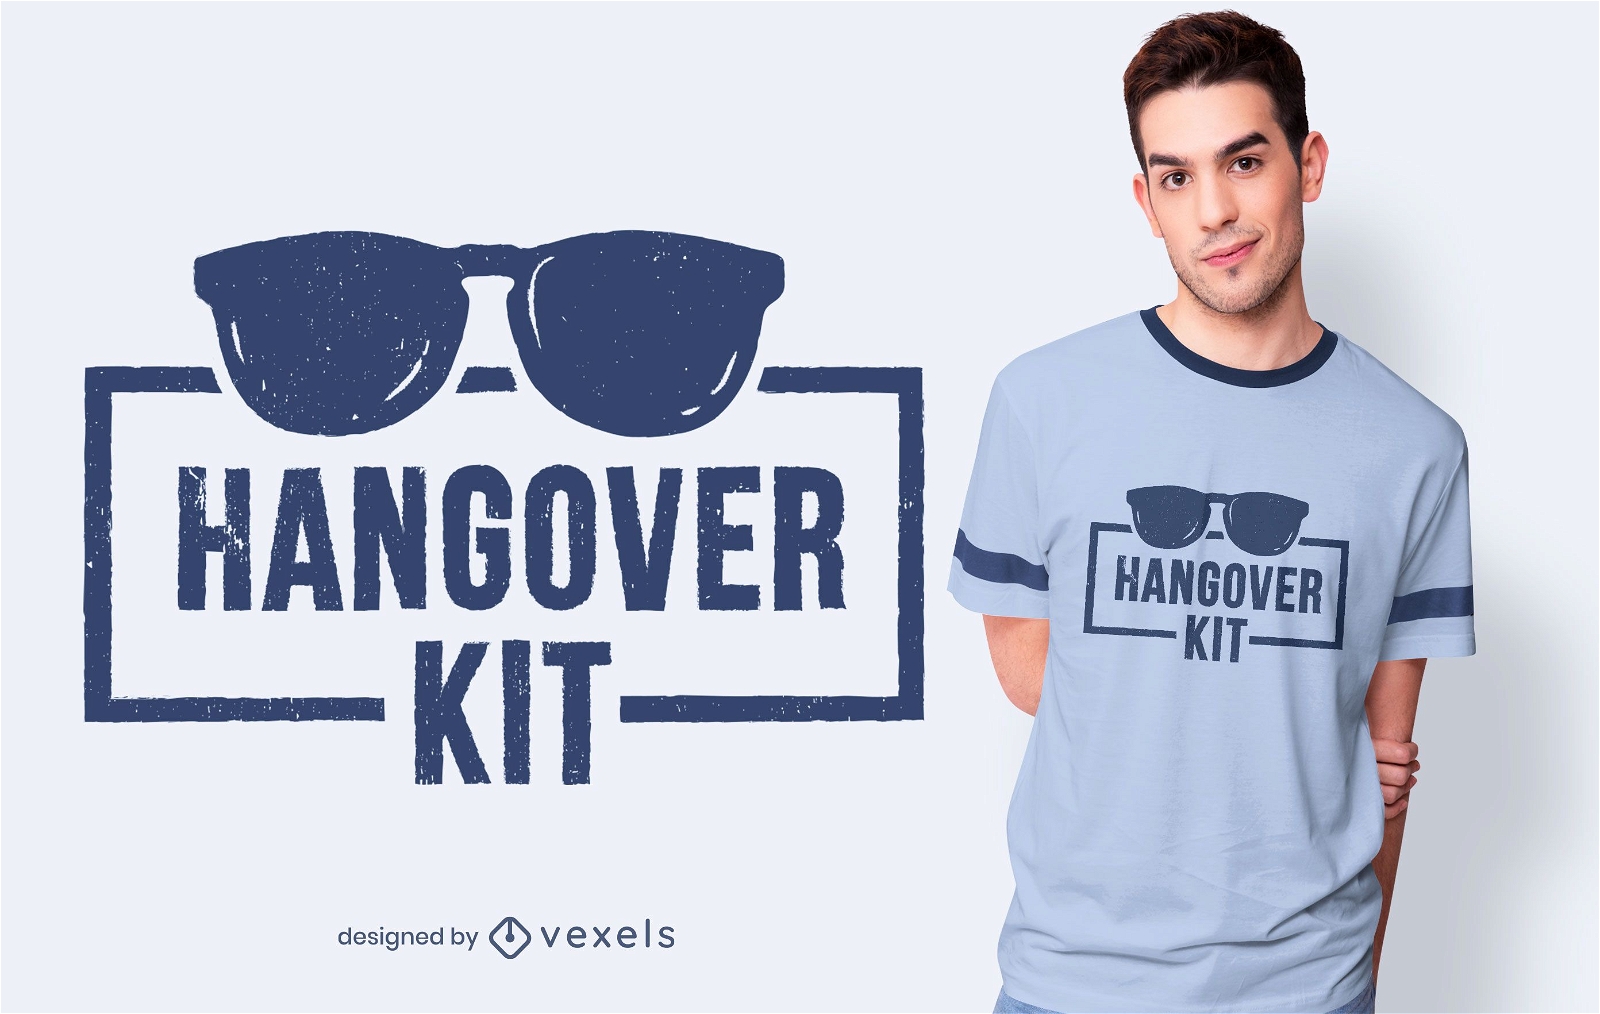 Hangover kit t-shirt design